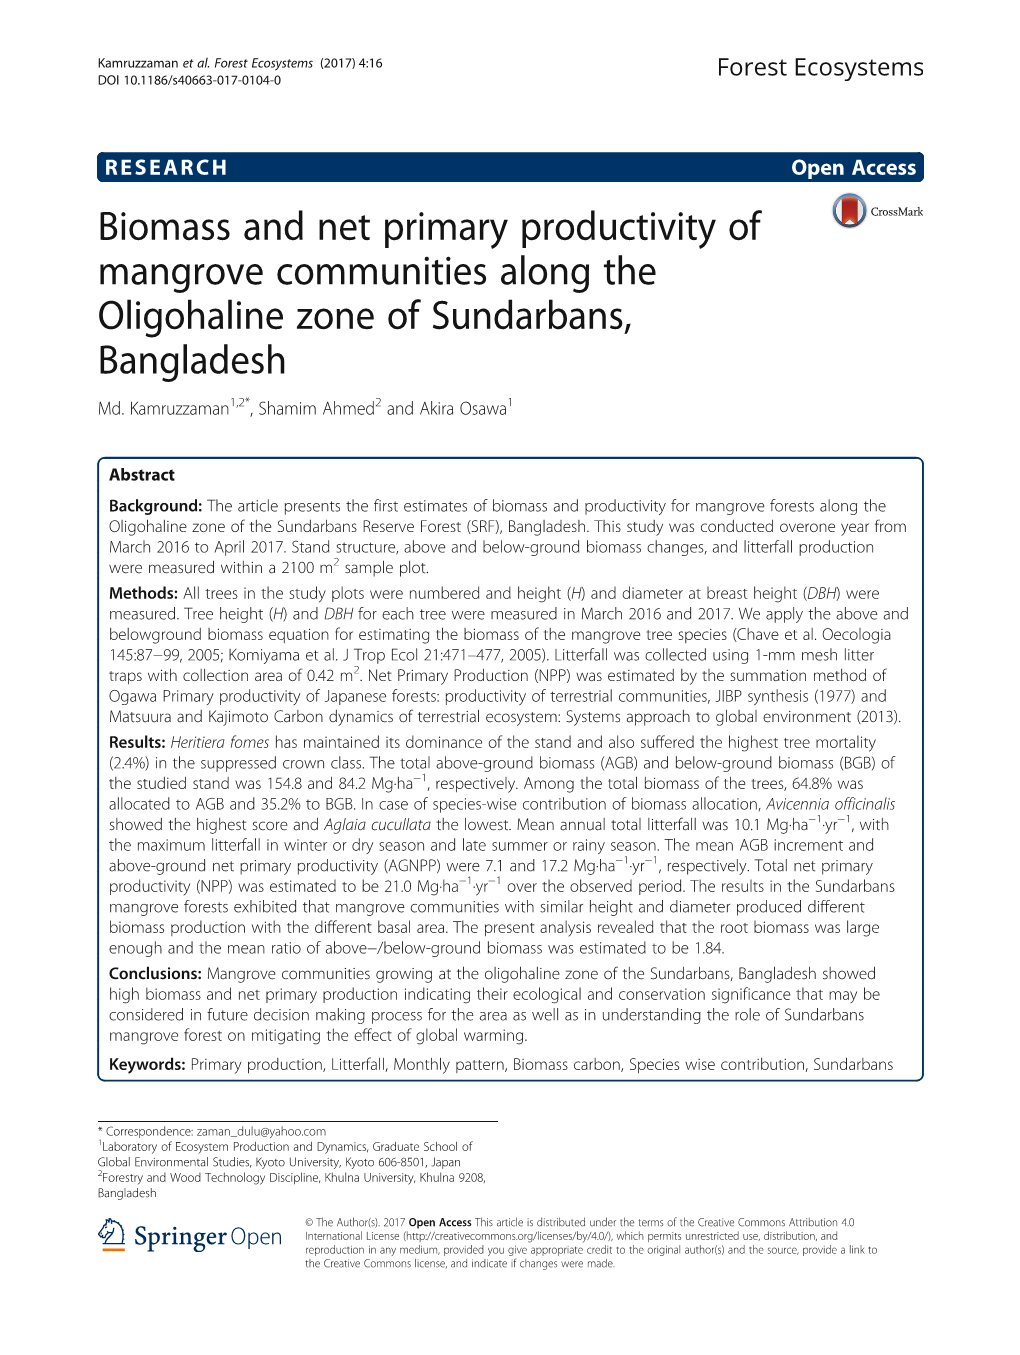 Biomass and Net Primary Productivity of Mangrove Communities Along the Oligohaline Zone of Sundarbans, Bangladesh Md